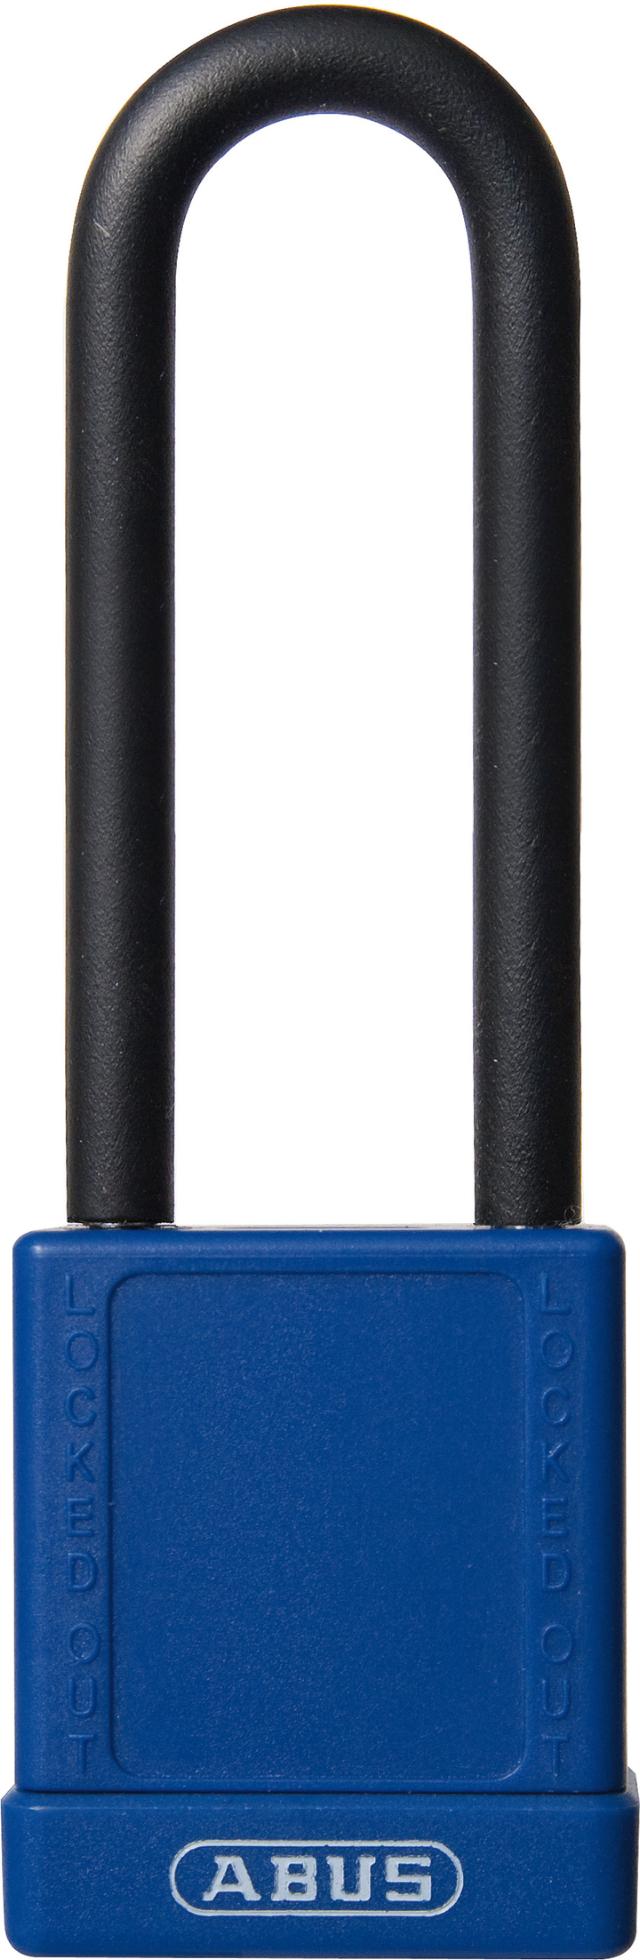 Abus padlock 74/40HB75 blue